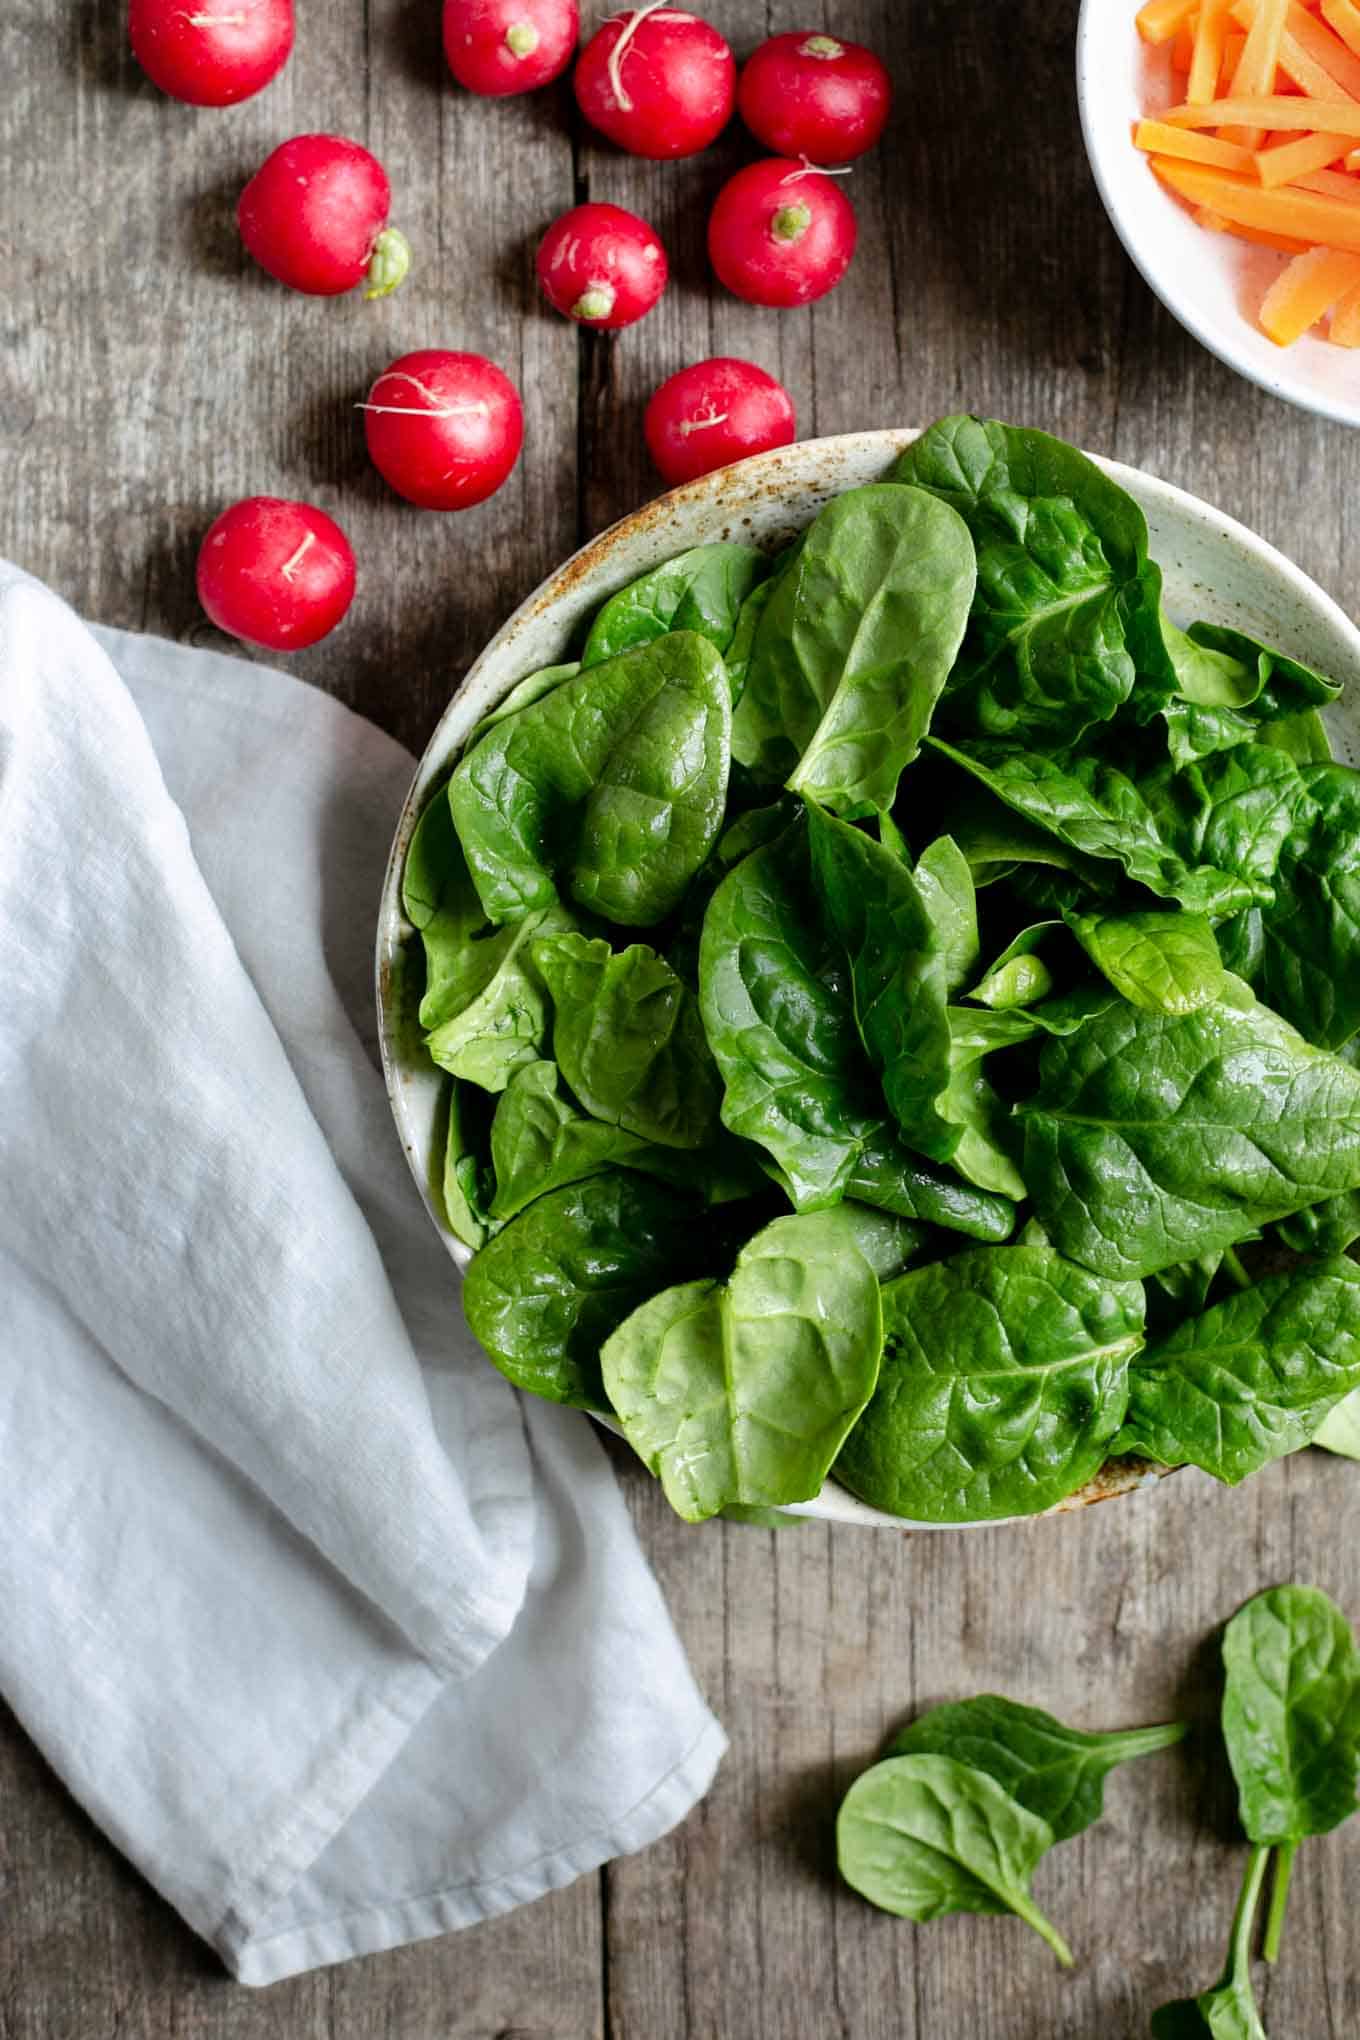 Fresh, super-clean spinach and beetroot salad #veganrecipe #saladrecipe #healthyfood | via @annabanana.co